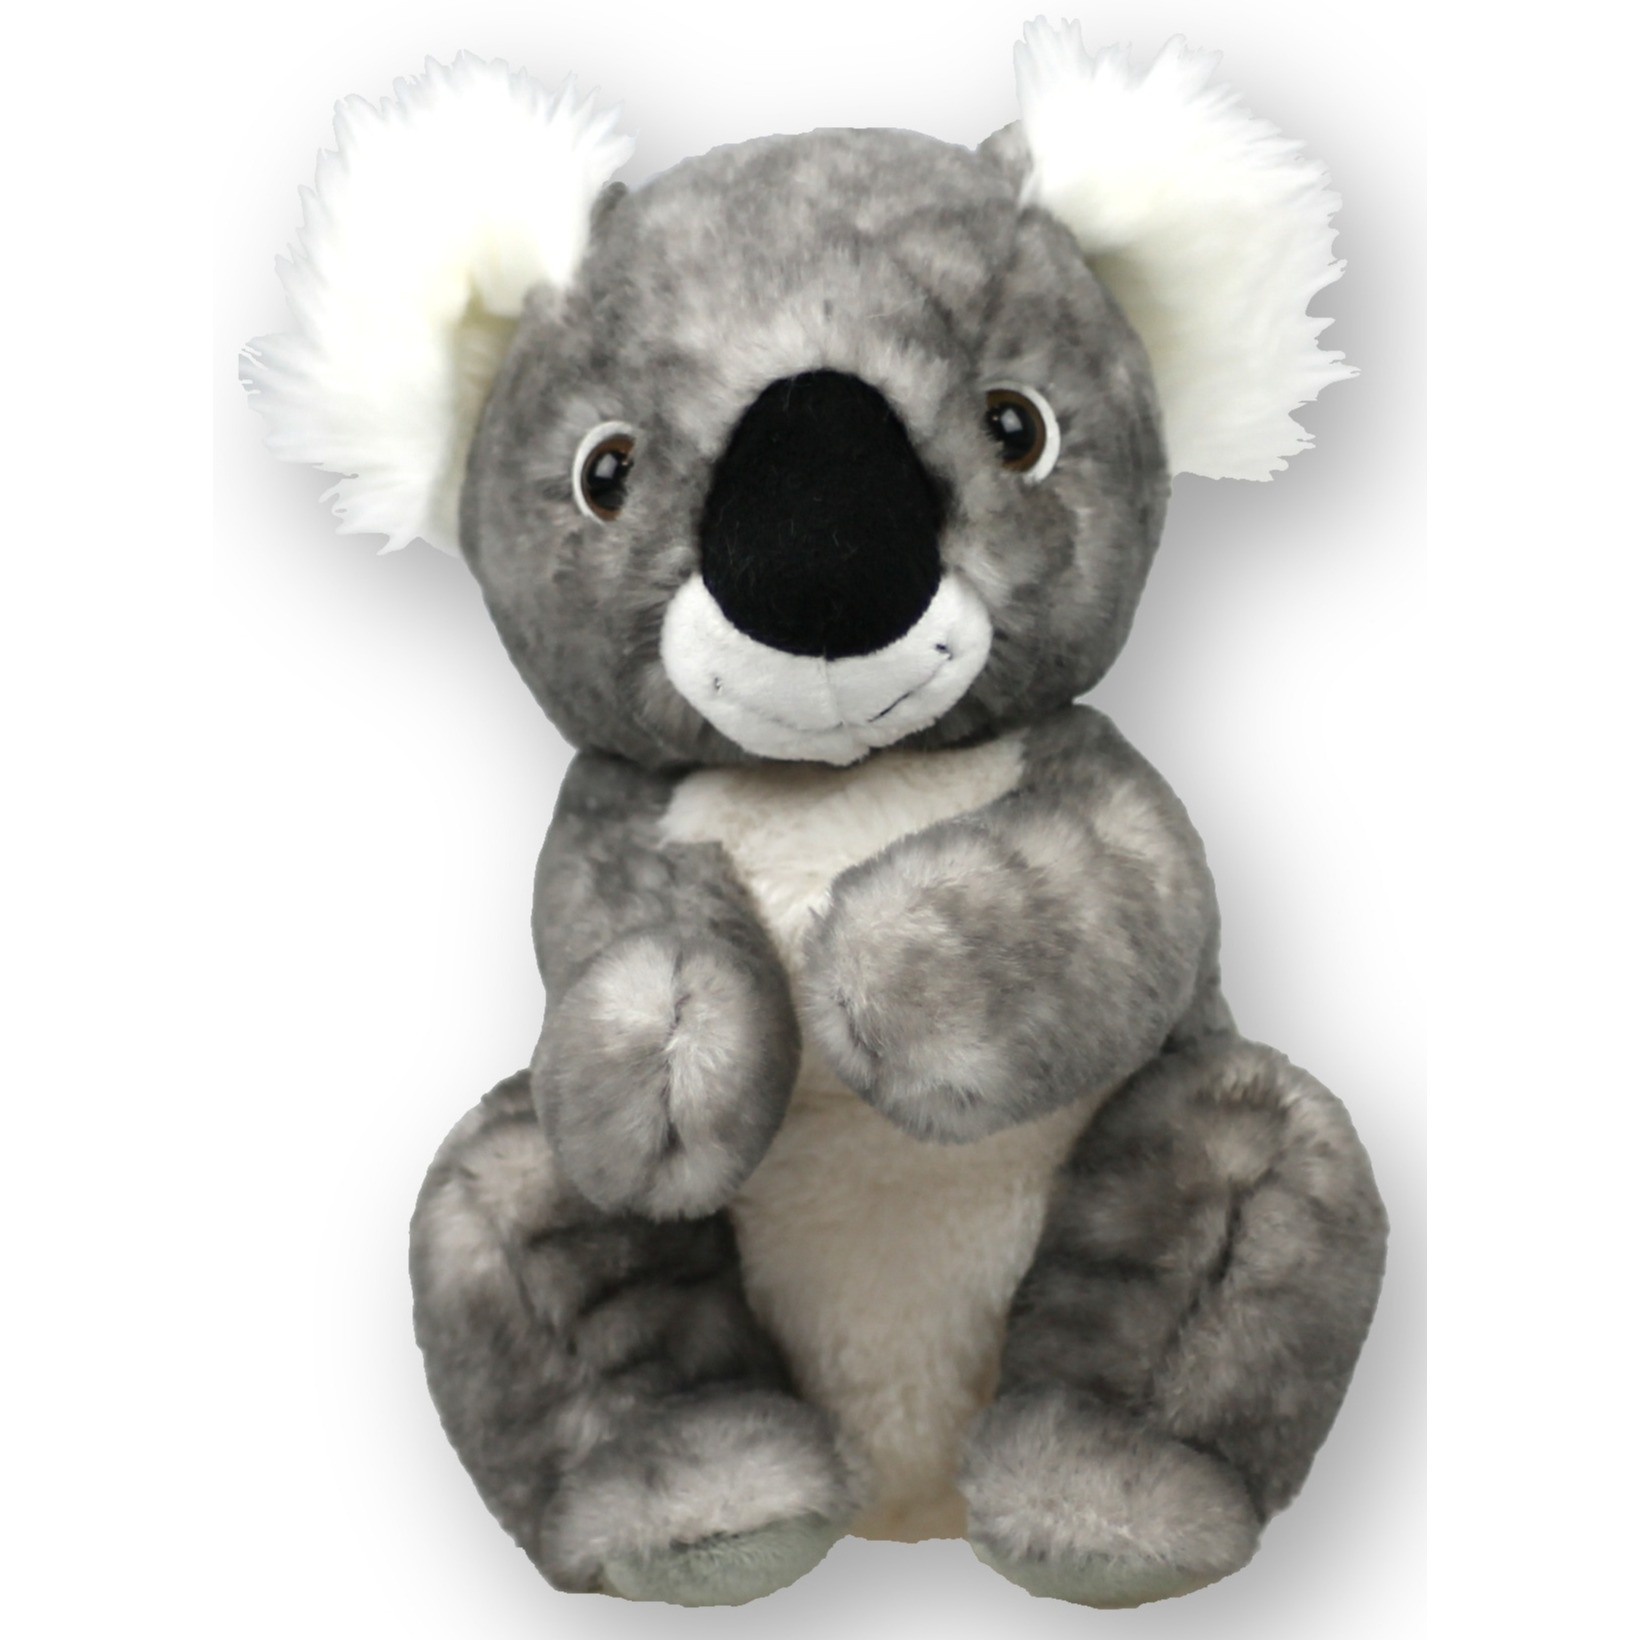 Inware pluche koala beer knuffeldier grijs zittend 22 cm